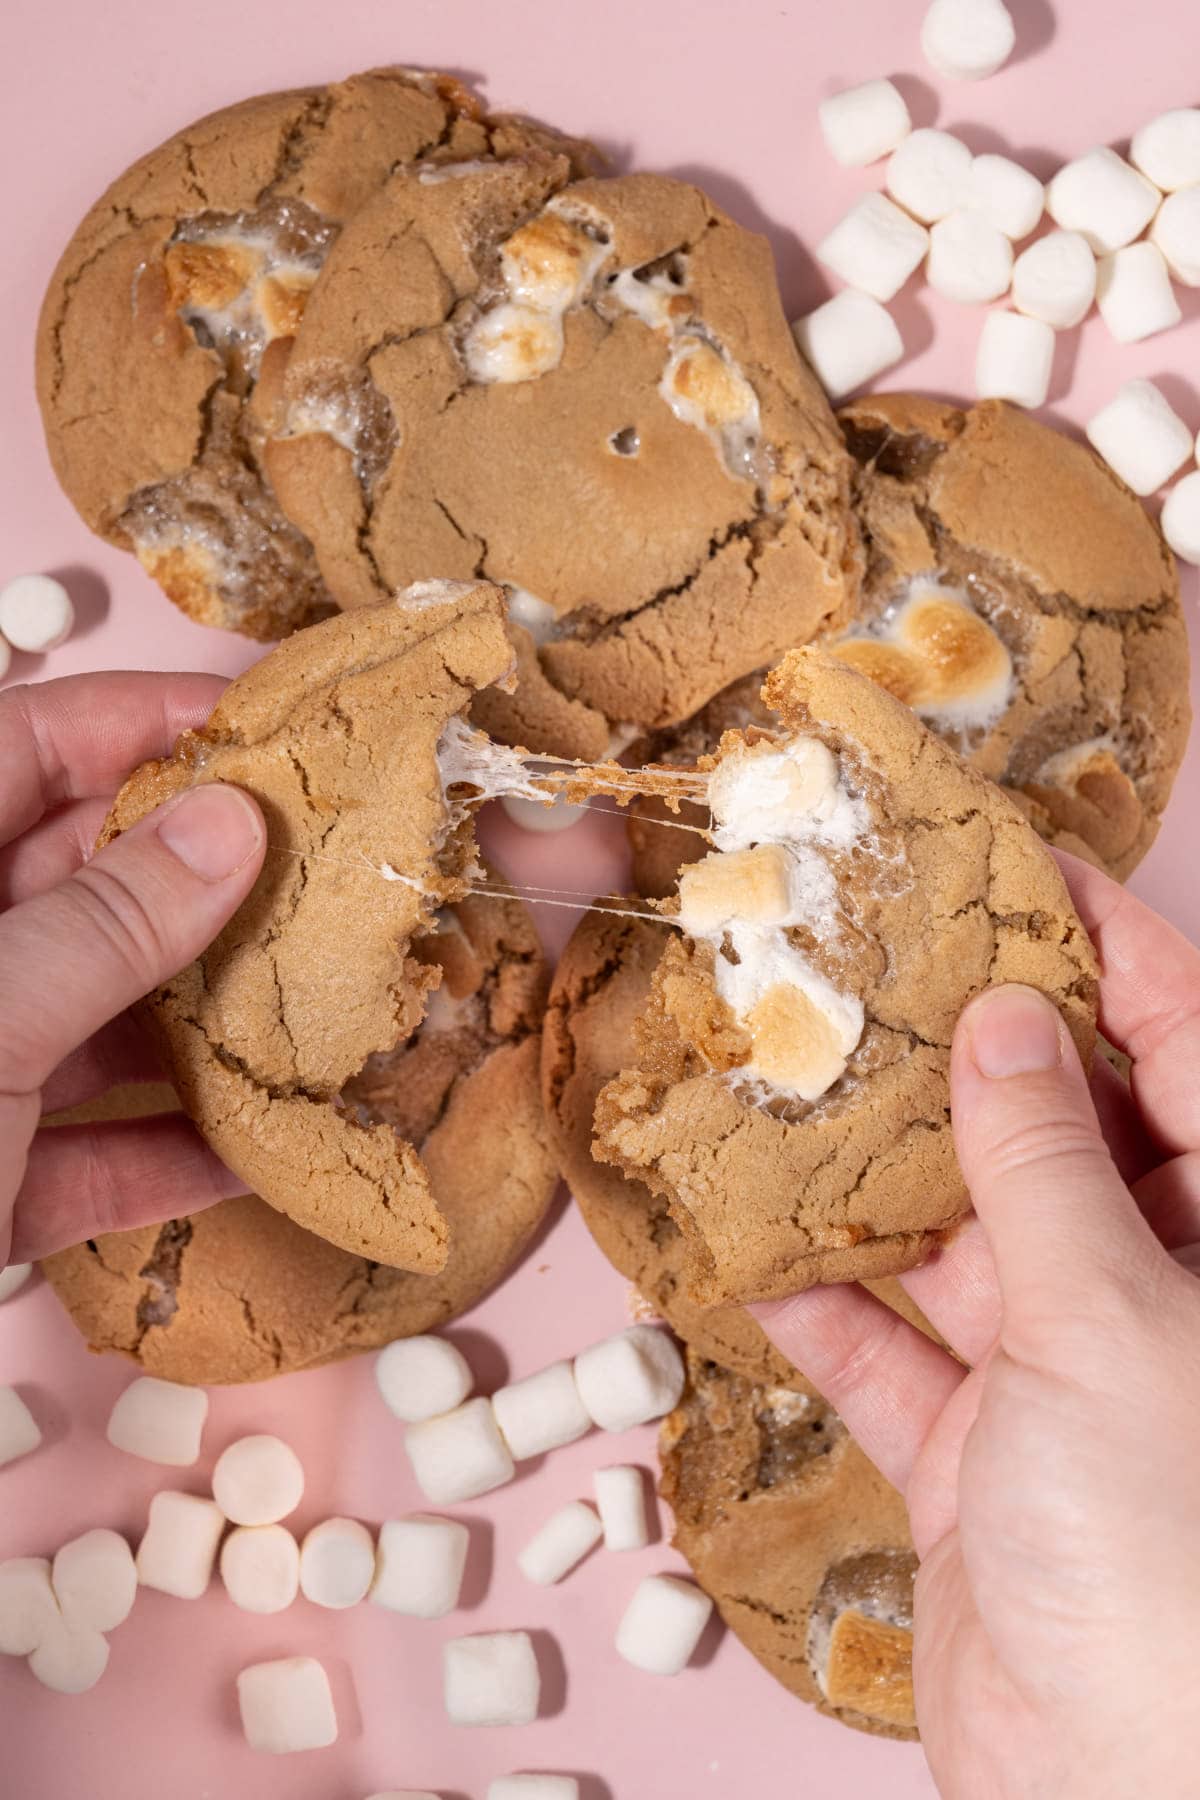 Breaking Open Toasted Marshmallow Cookie